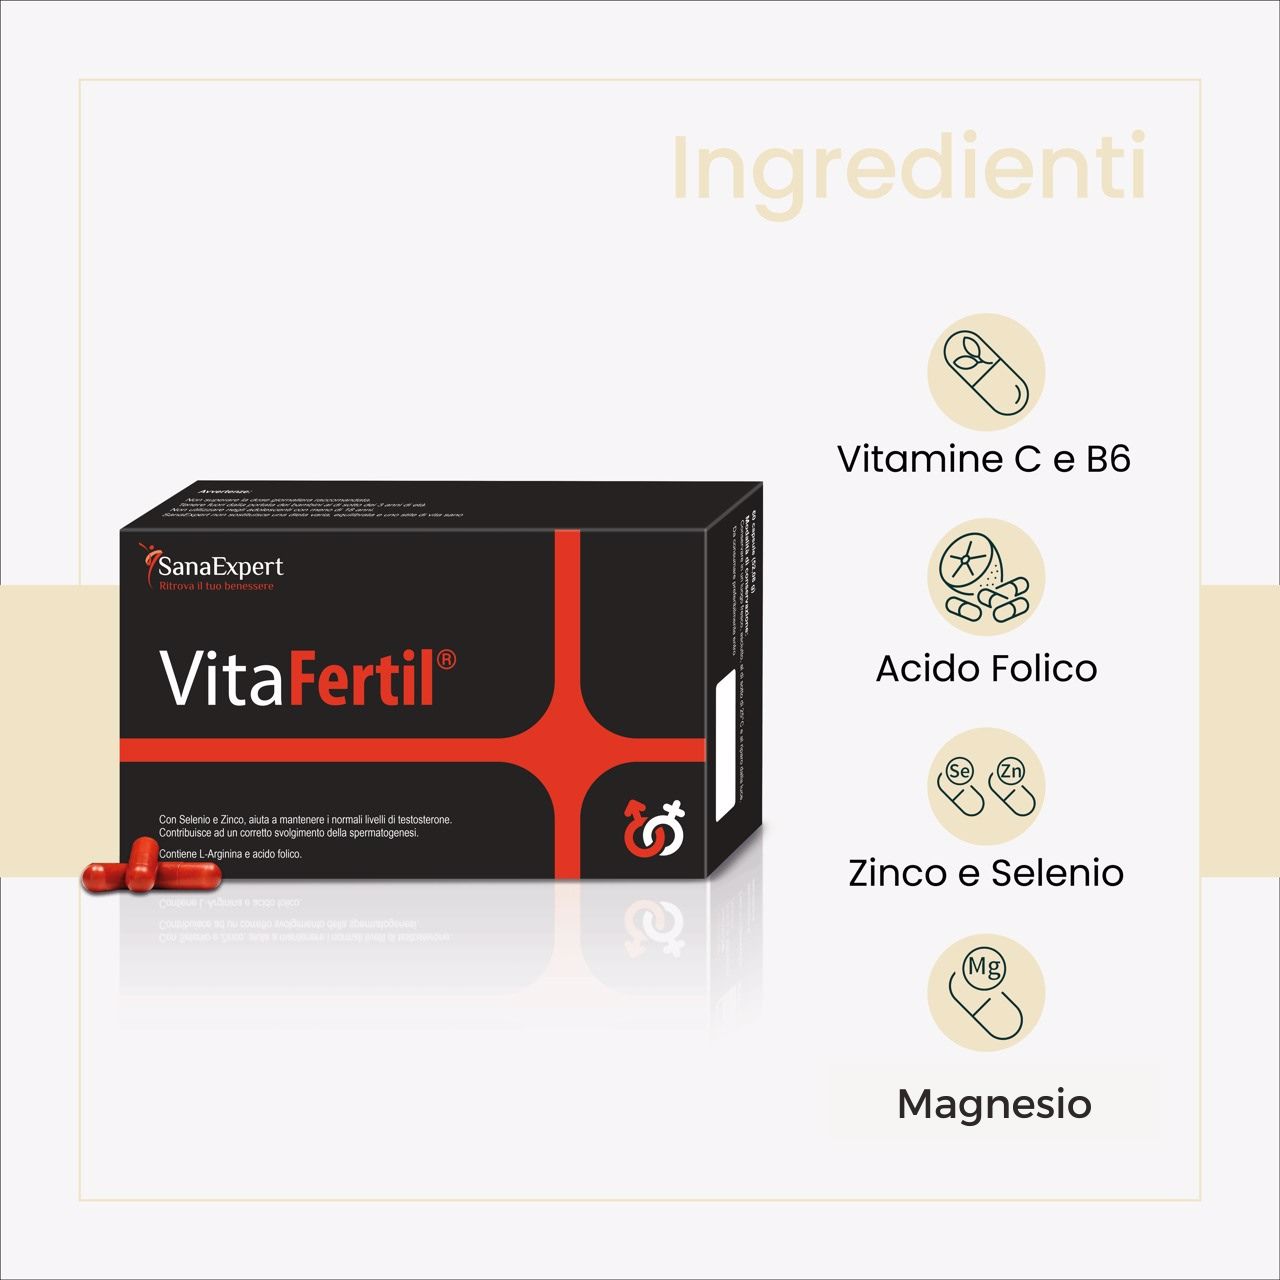 SanaExpert VitaFertil ingredienti